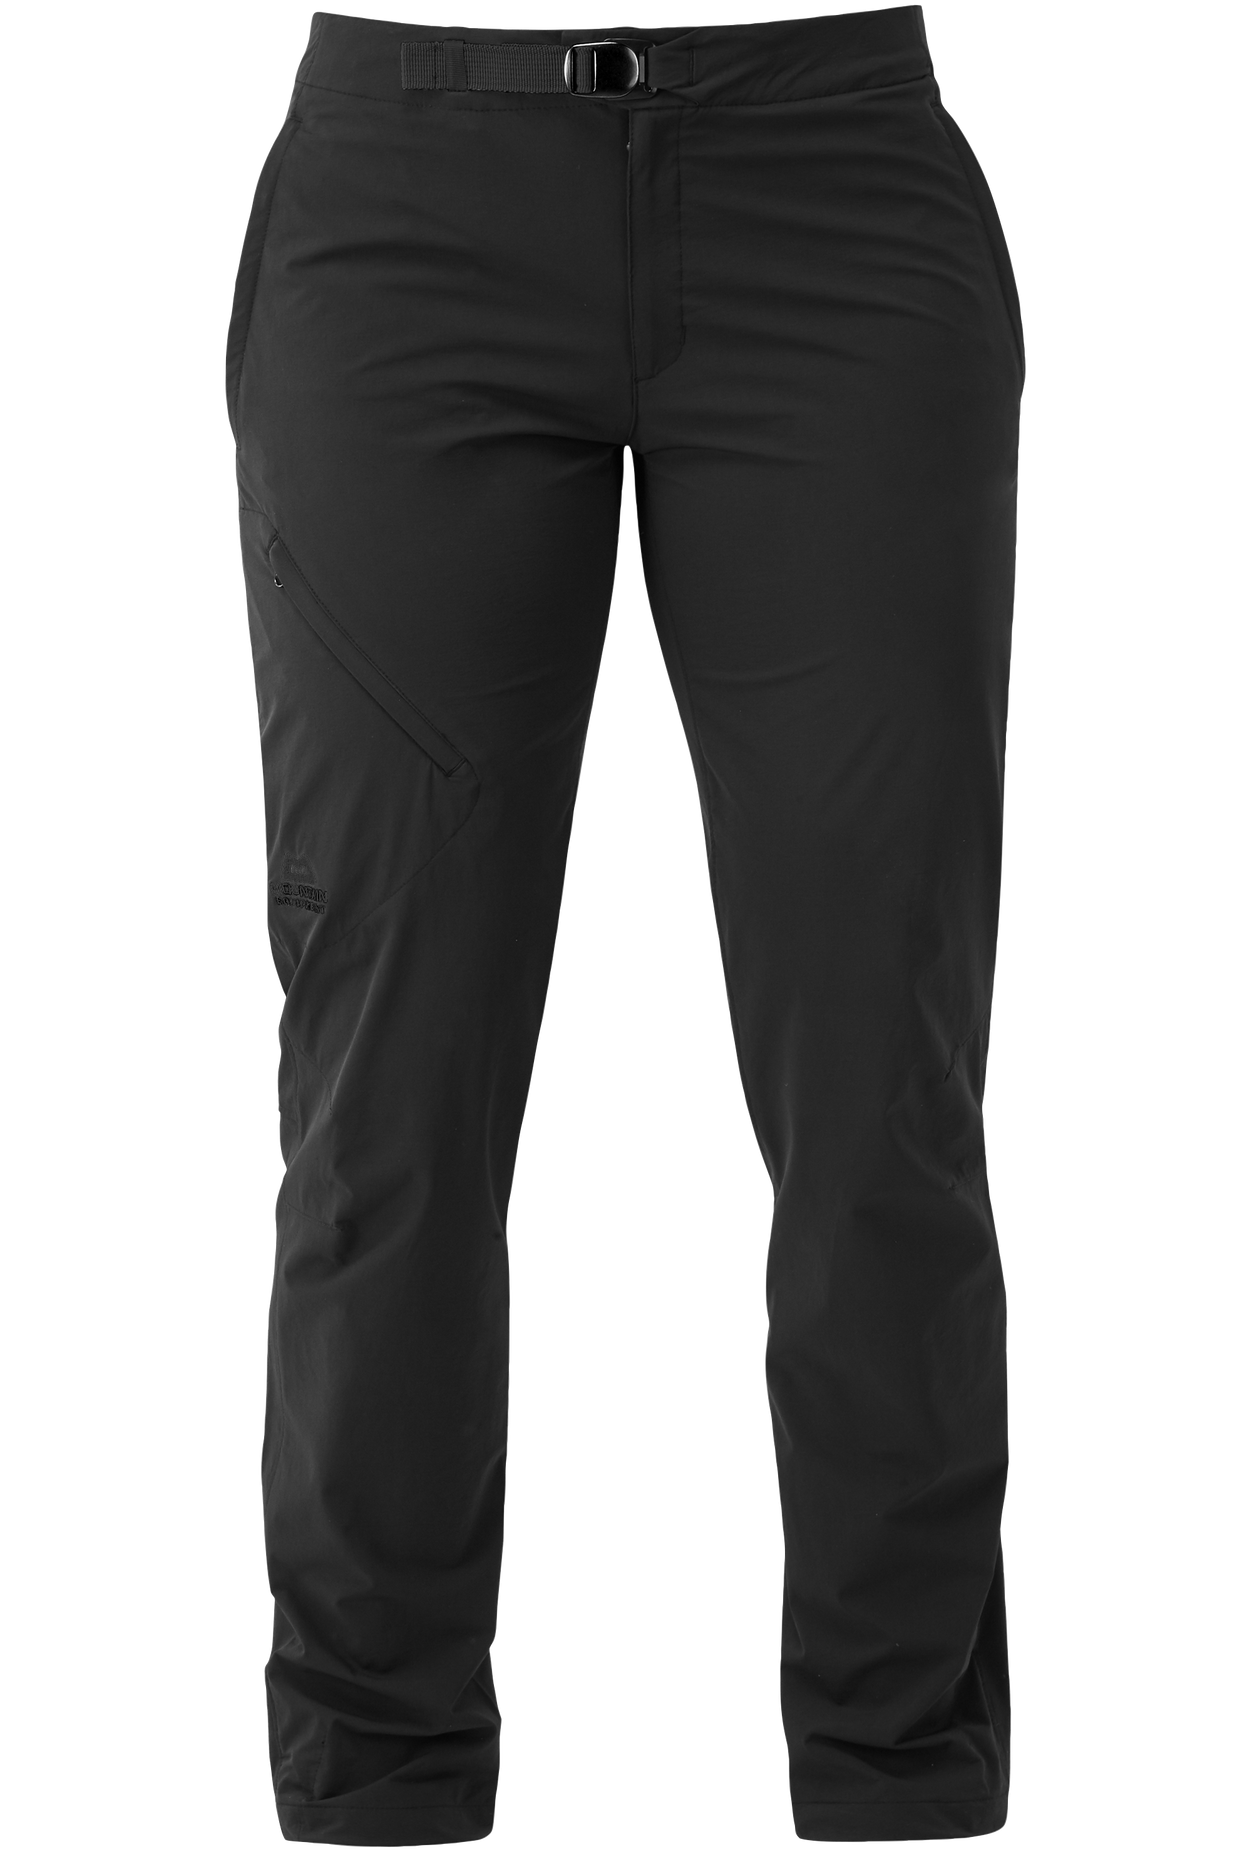 Mountain Equipment dámské softshellové kalhoty Comici Wmns Pant - zkrácené Barva: black/black, Velikost: 8/XS